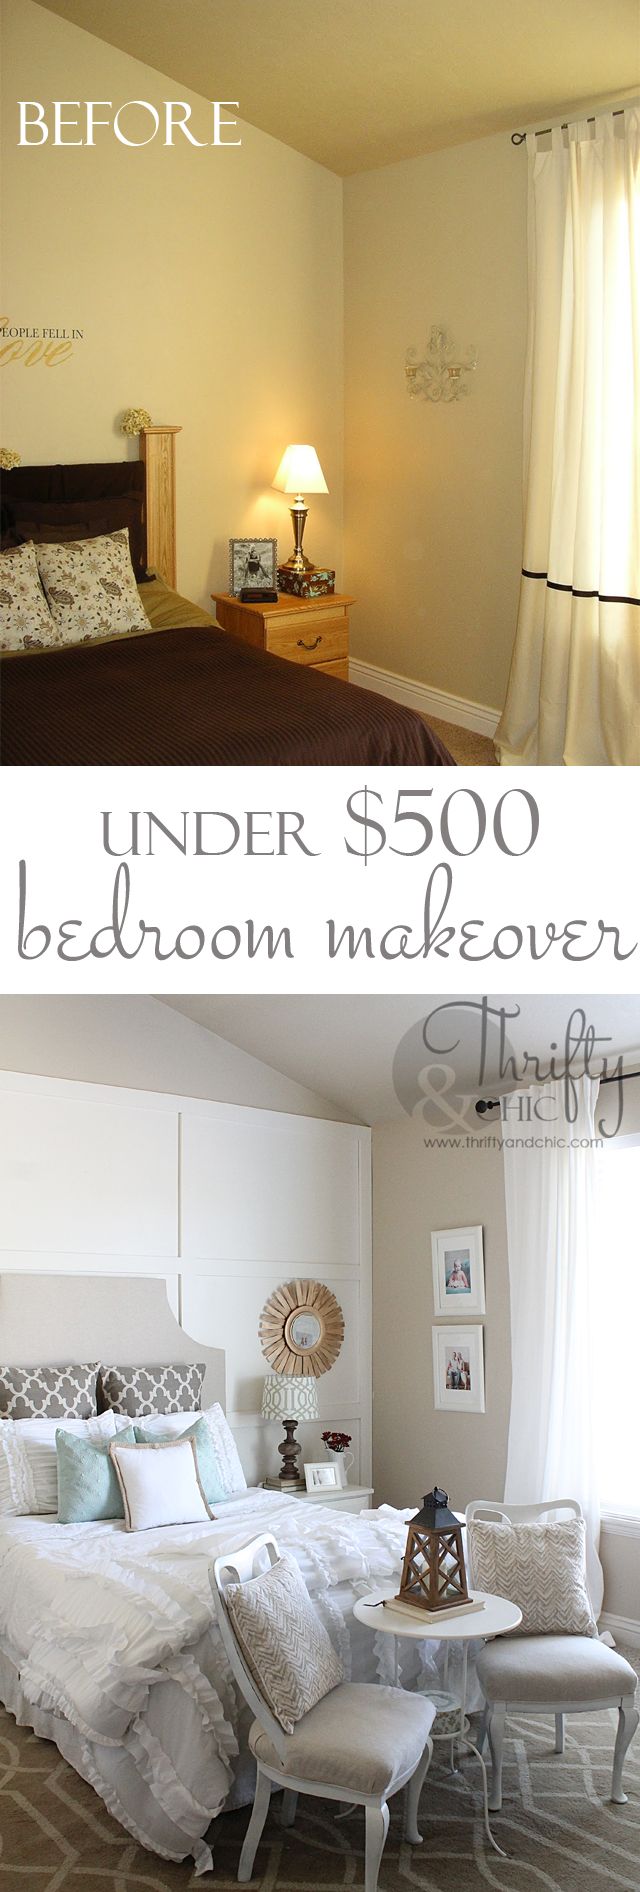 Master bedroom makeover for under $500. Great DIY ideas!